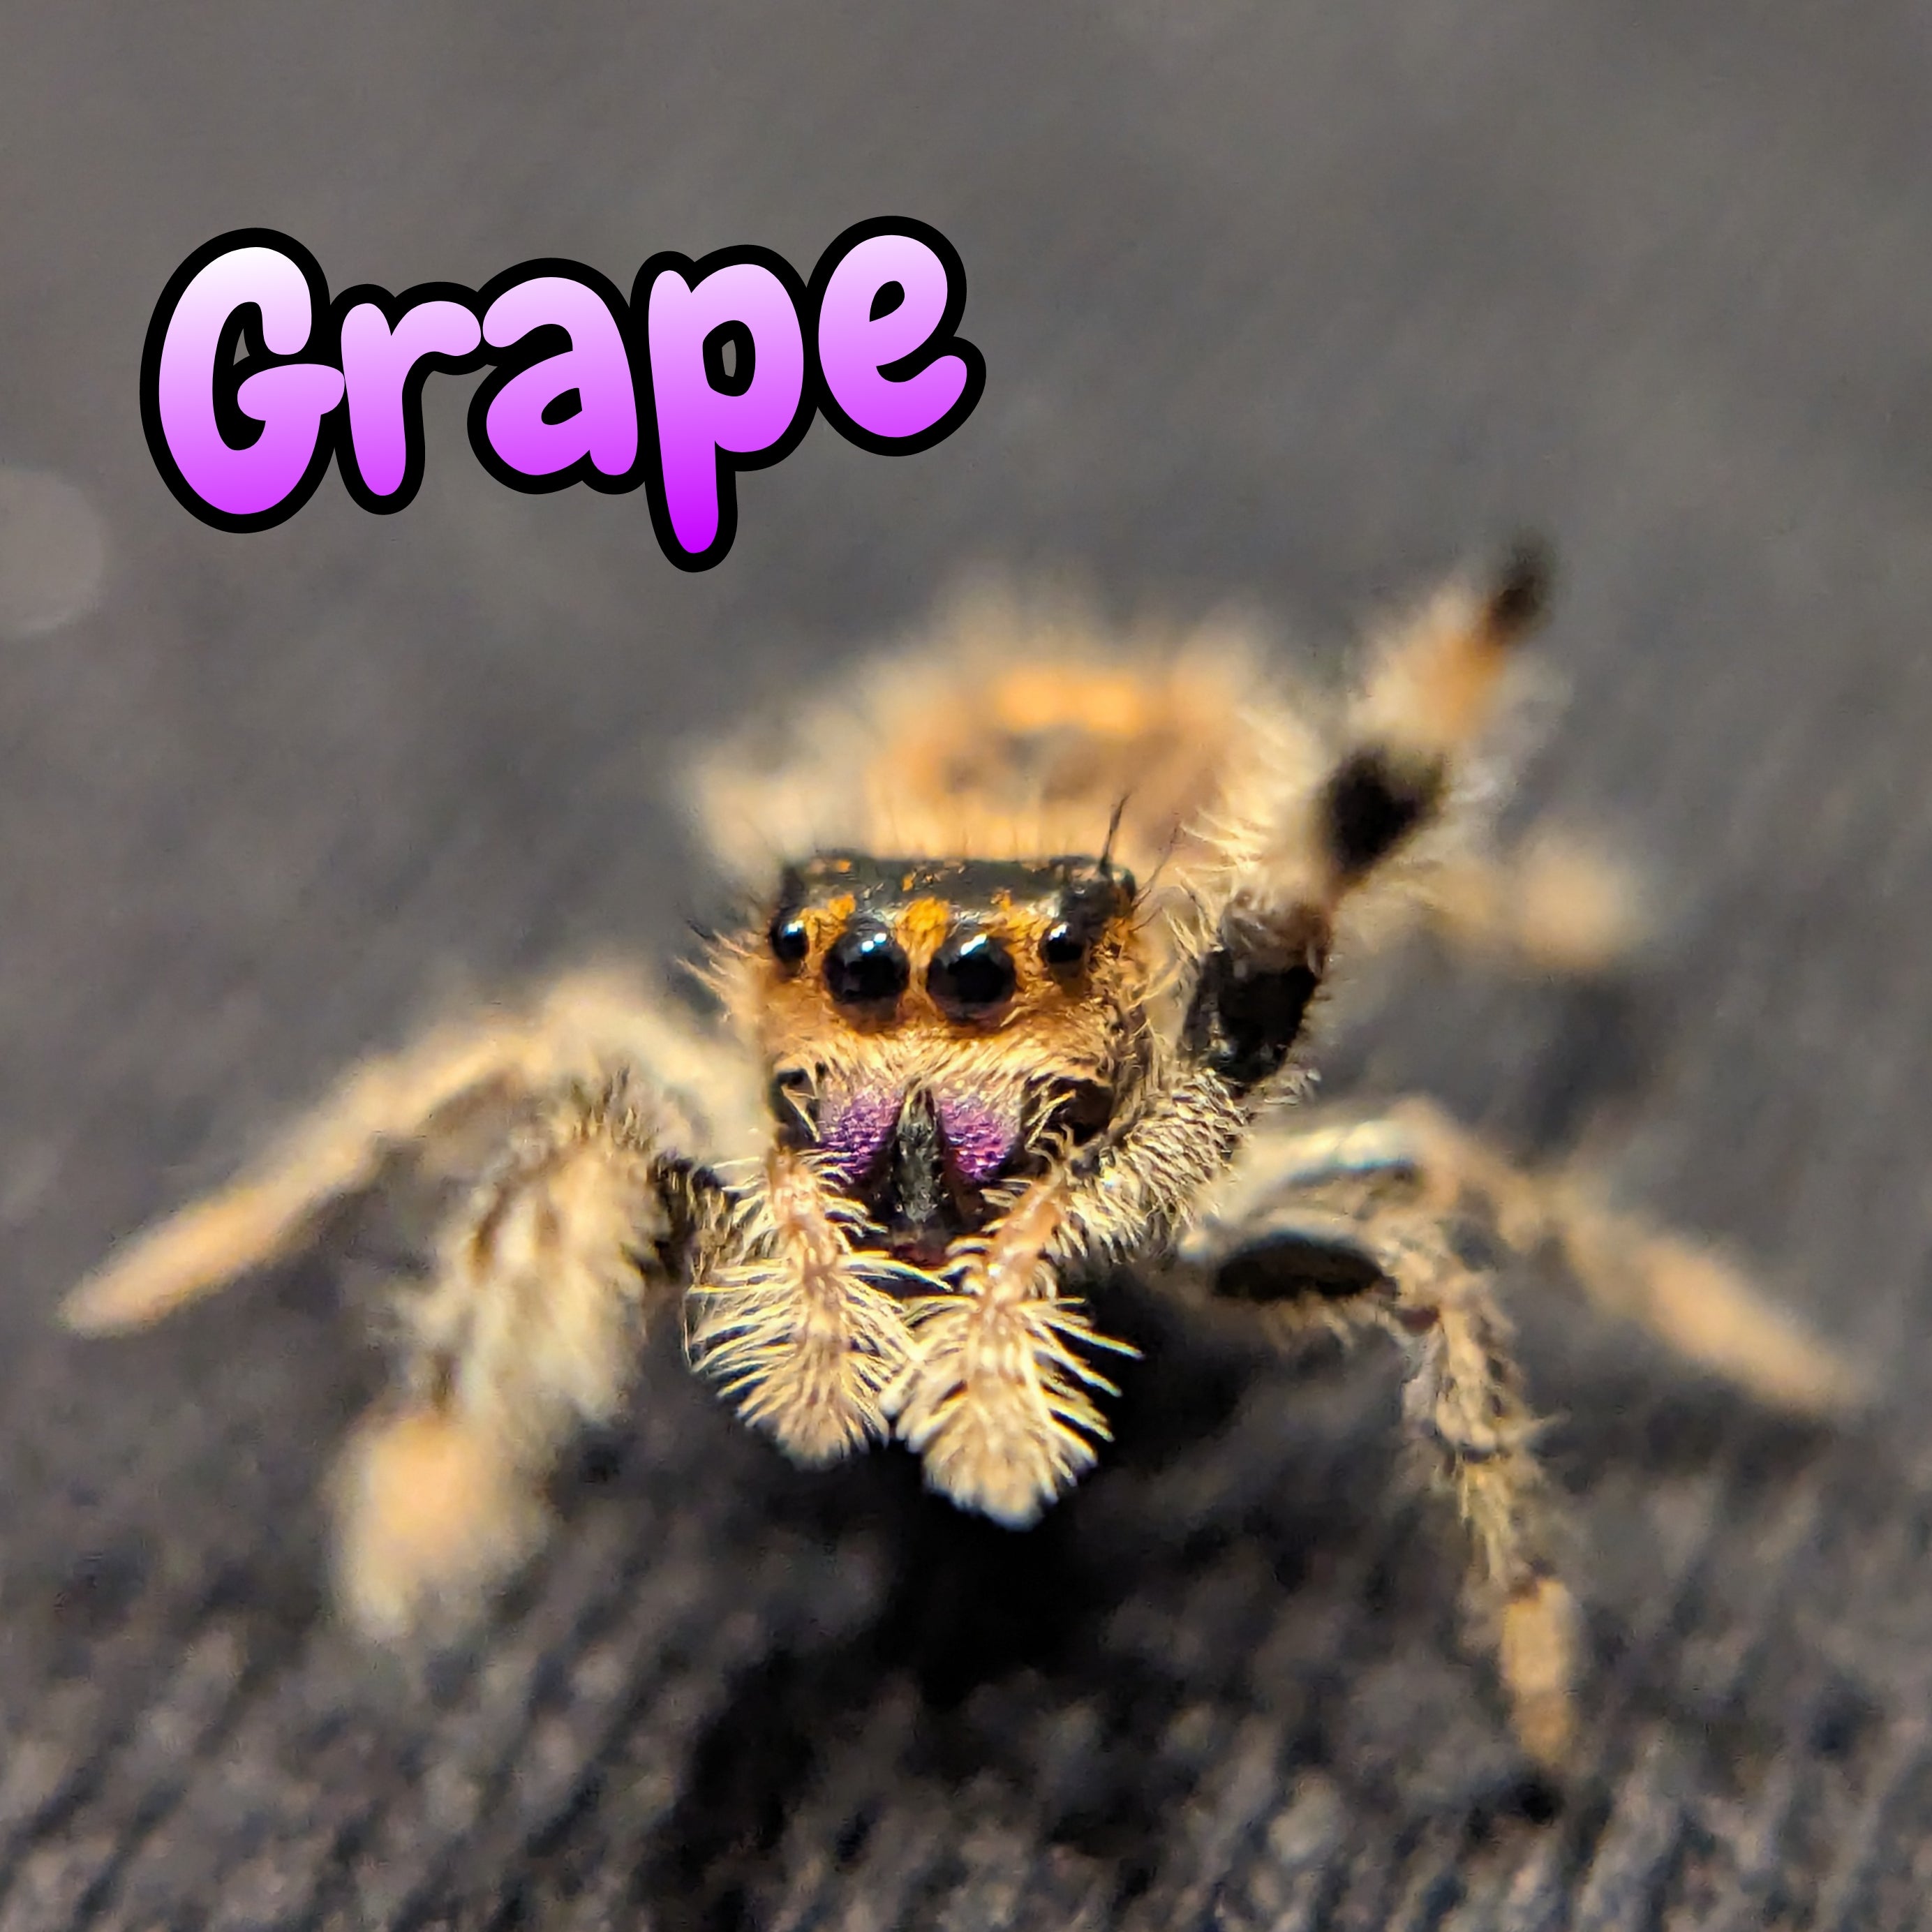 Regal Jumping Spider "Grape"